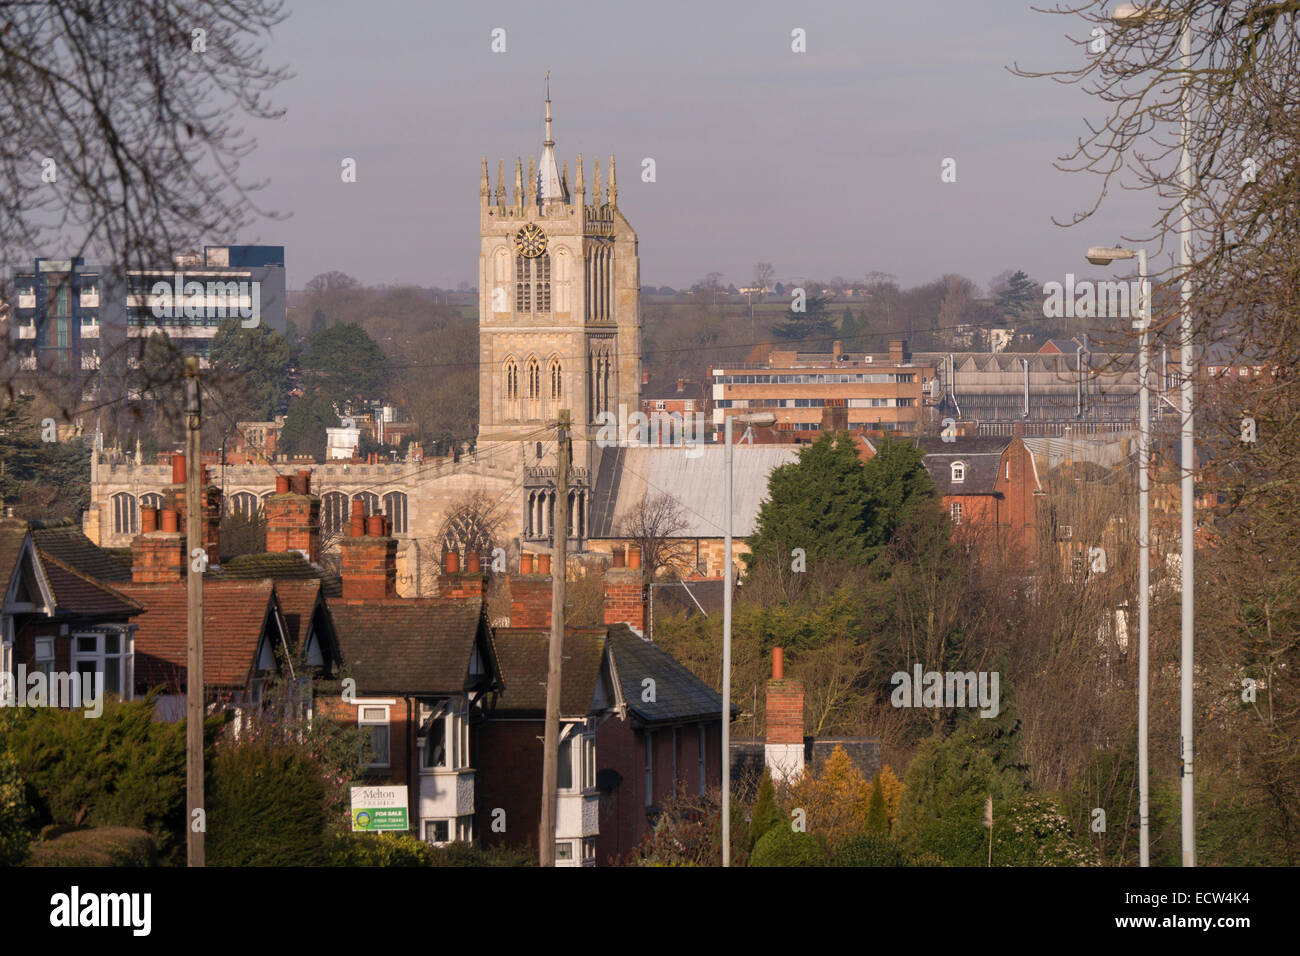 St Mary's Church tower, Melton Mowbray, Leicestershire, England, UK Stock Photo